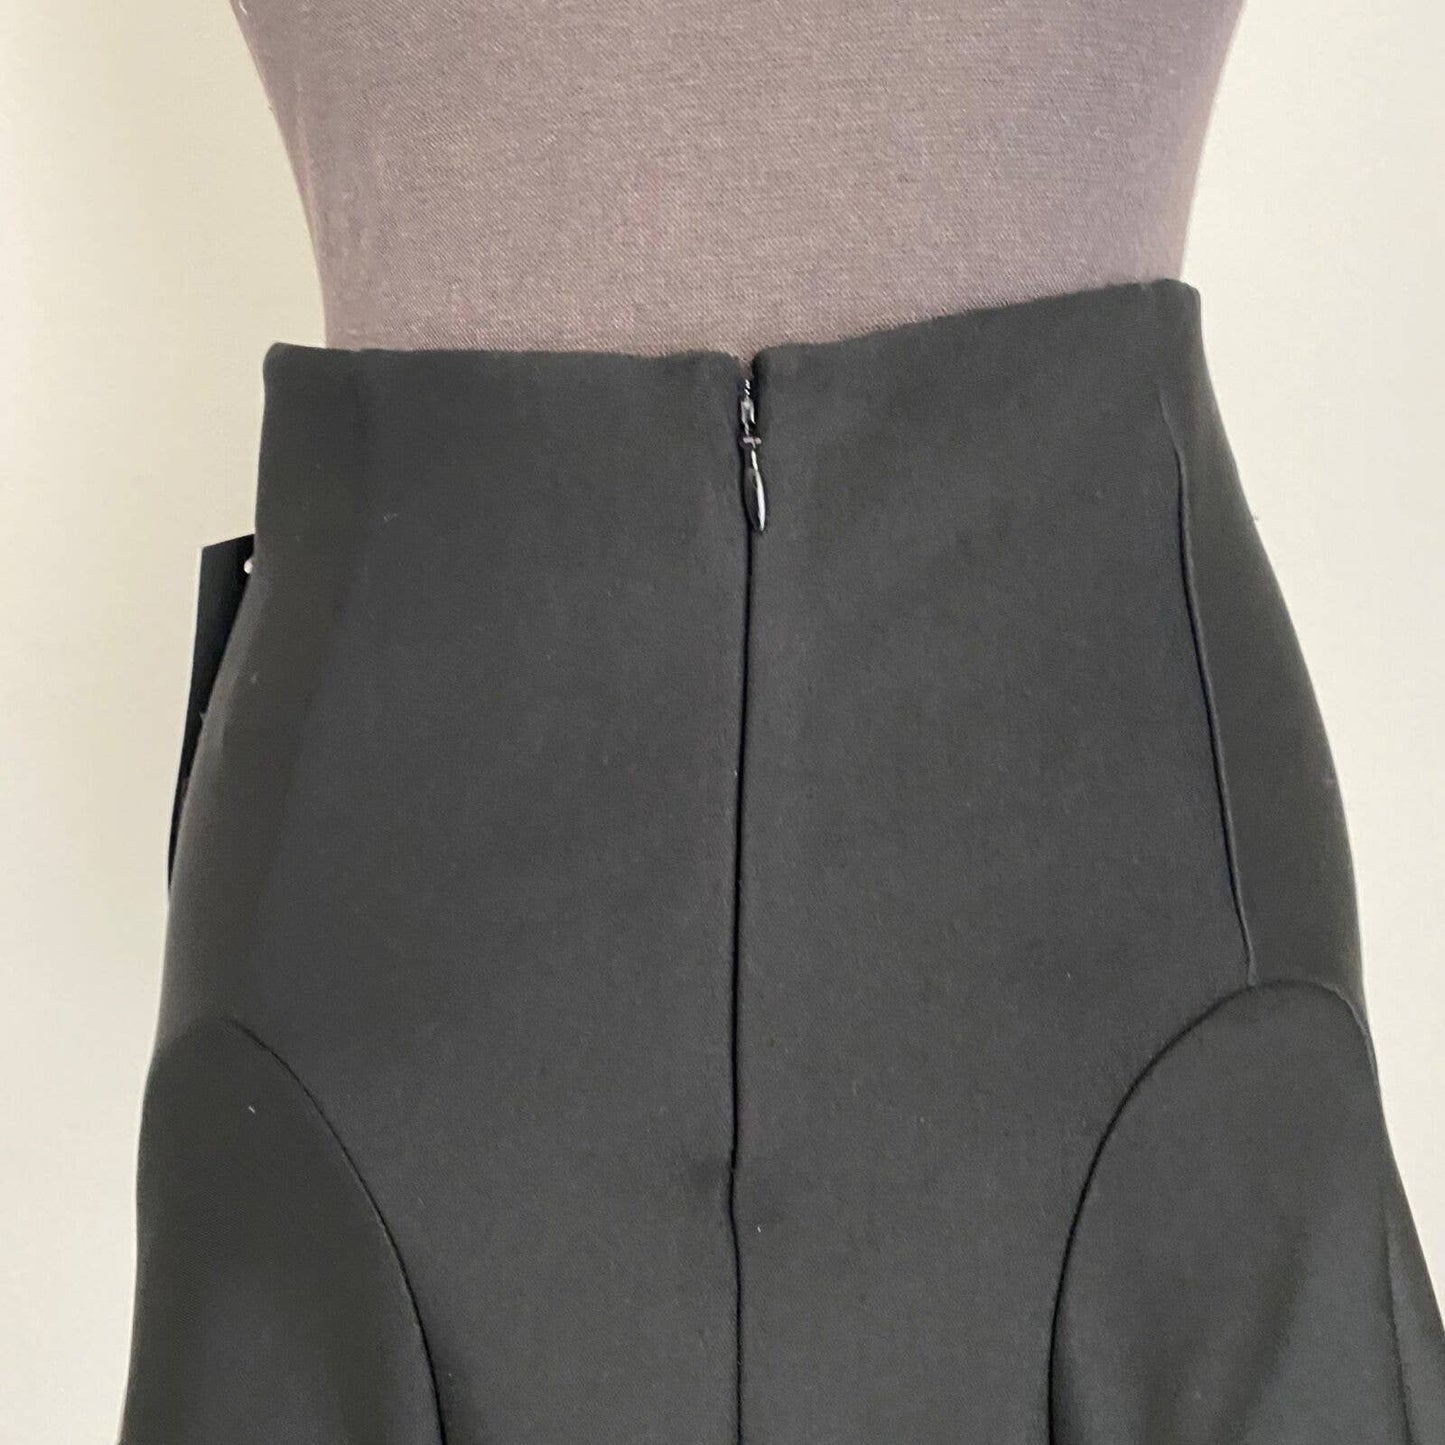 Mossimo sz XS high rise waisted Flare mini skirt NWT